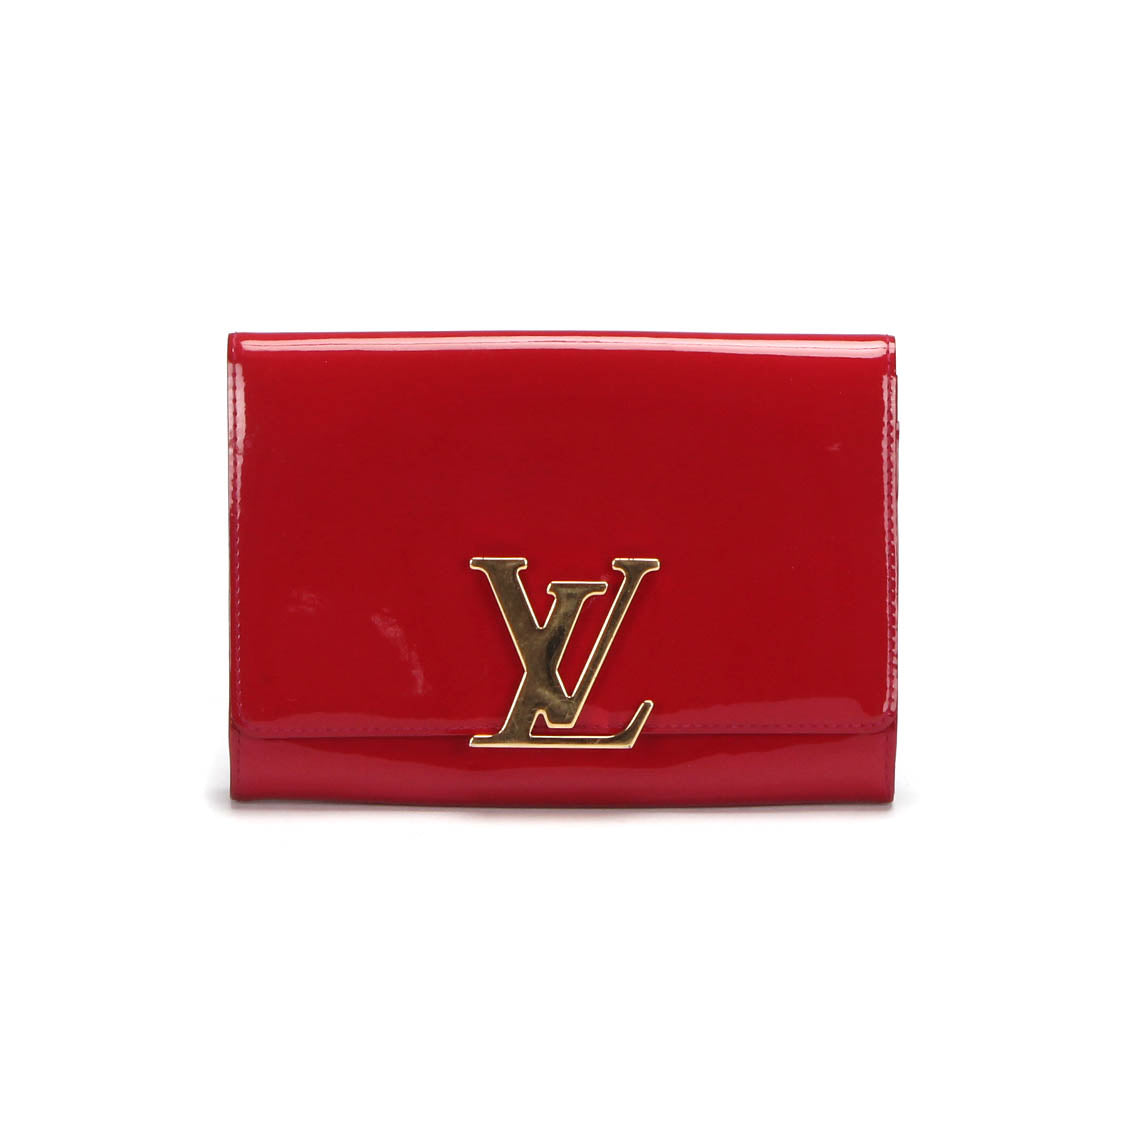 Louis Vuitton Vernis Louise Clutch Bag Leather Clutch Bag in Excellent condition